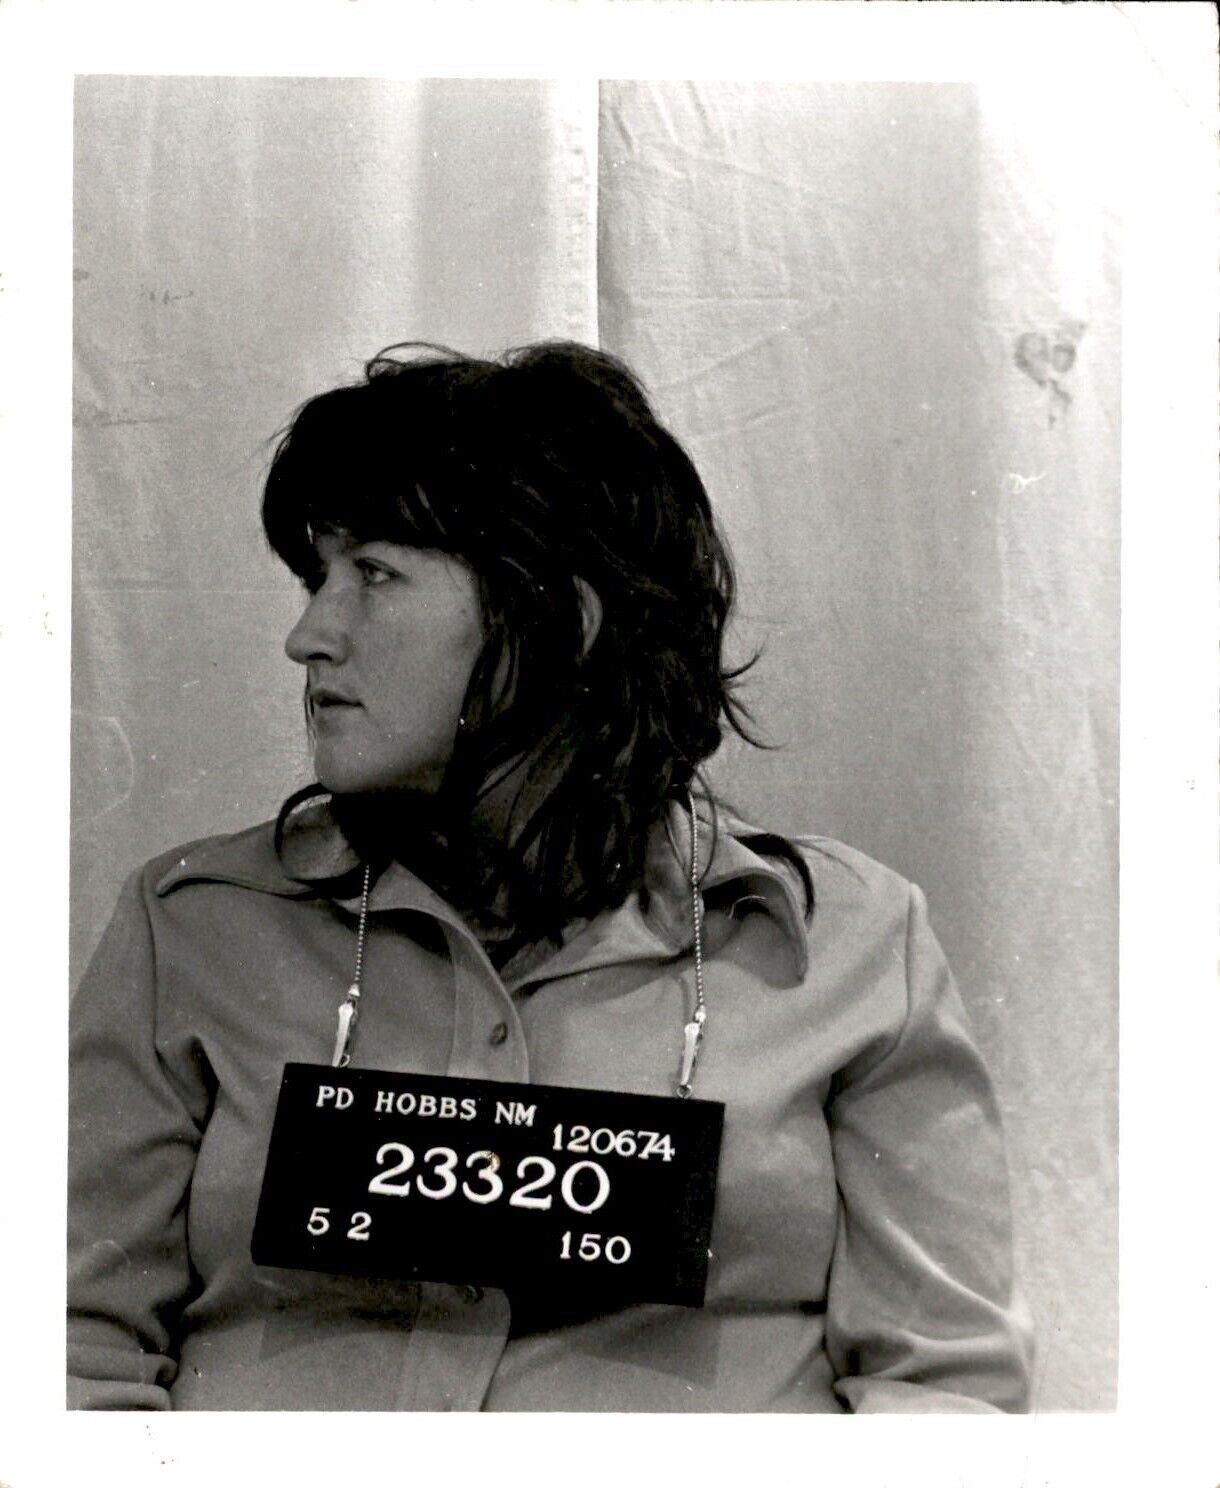 LD361 Original Photo WOMAN CRIMINAL ARRESTED Side Profile Mug Shot Booking PD